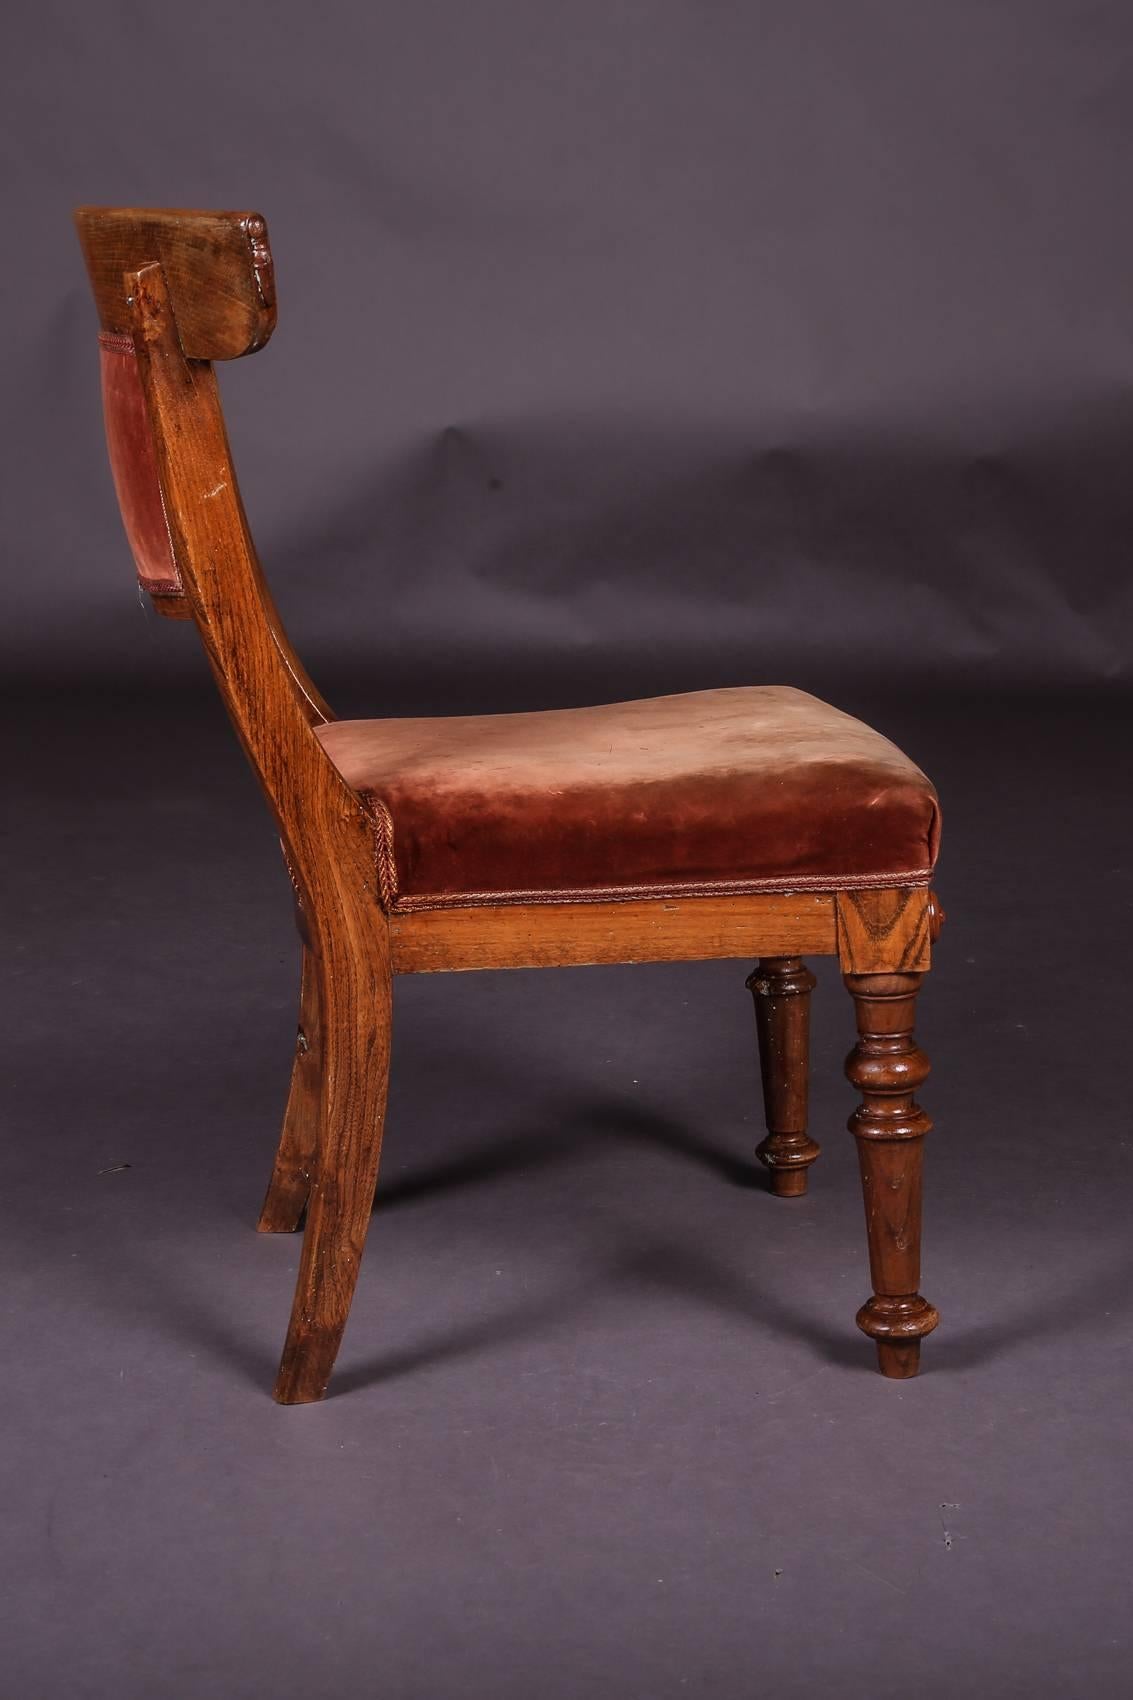 German 19th Century Biedermeier Curving Backrest Chair For Sale